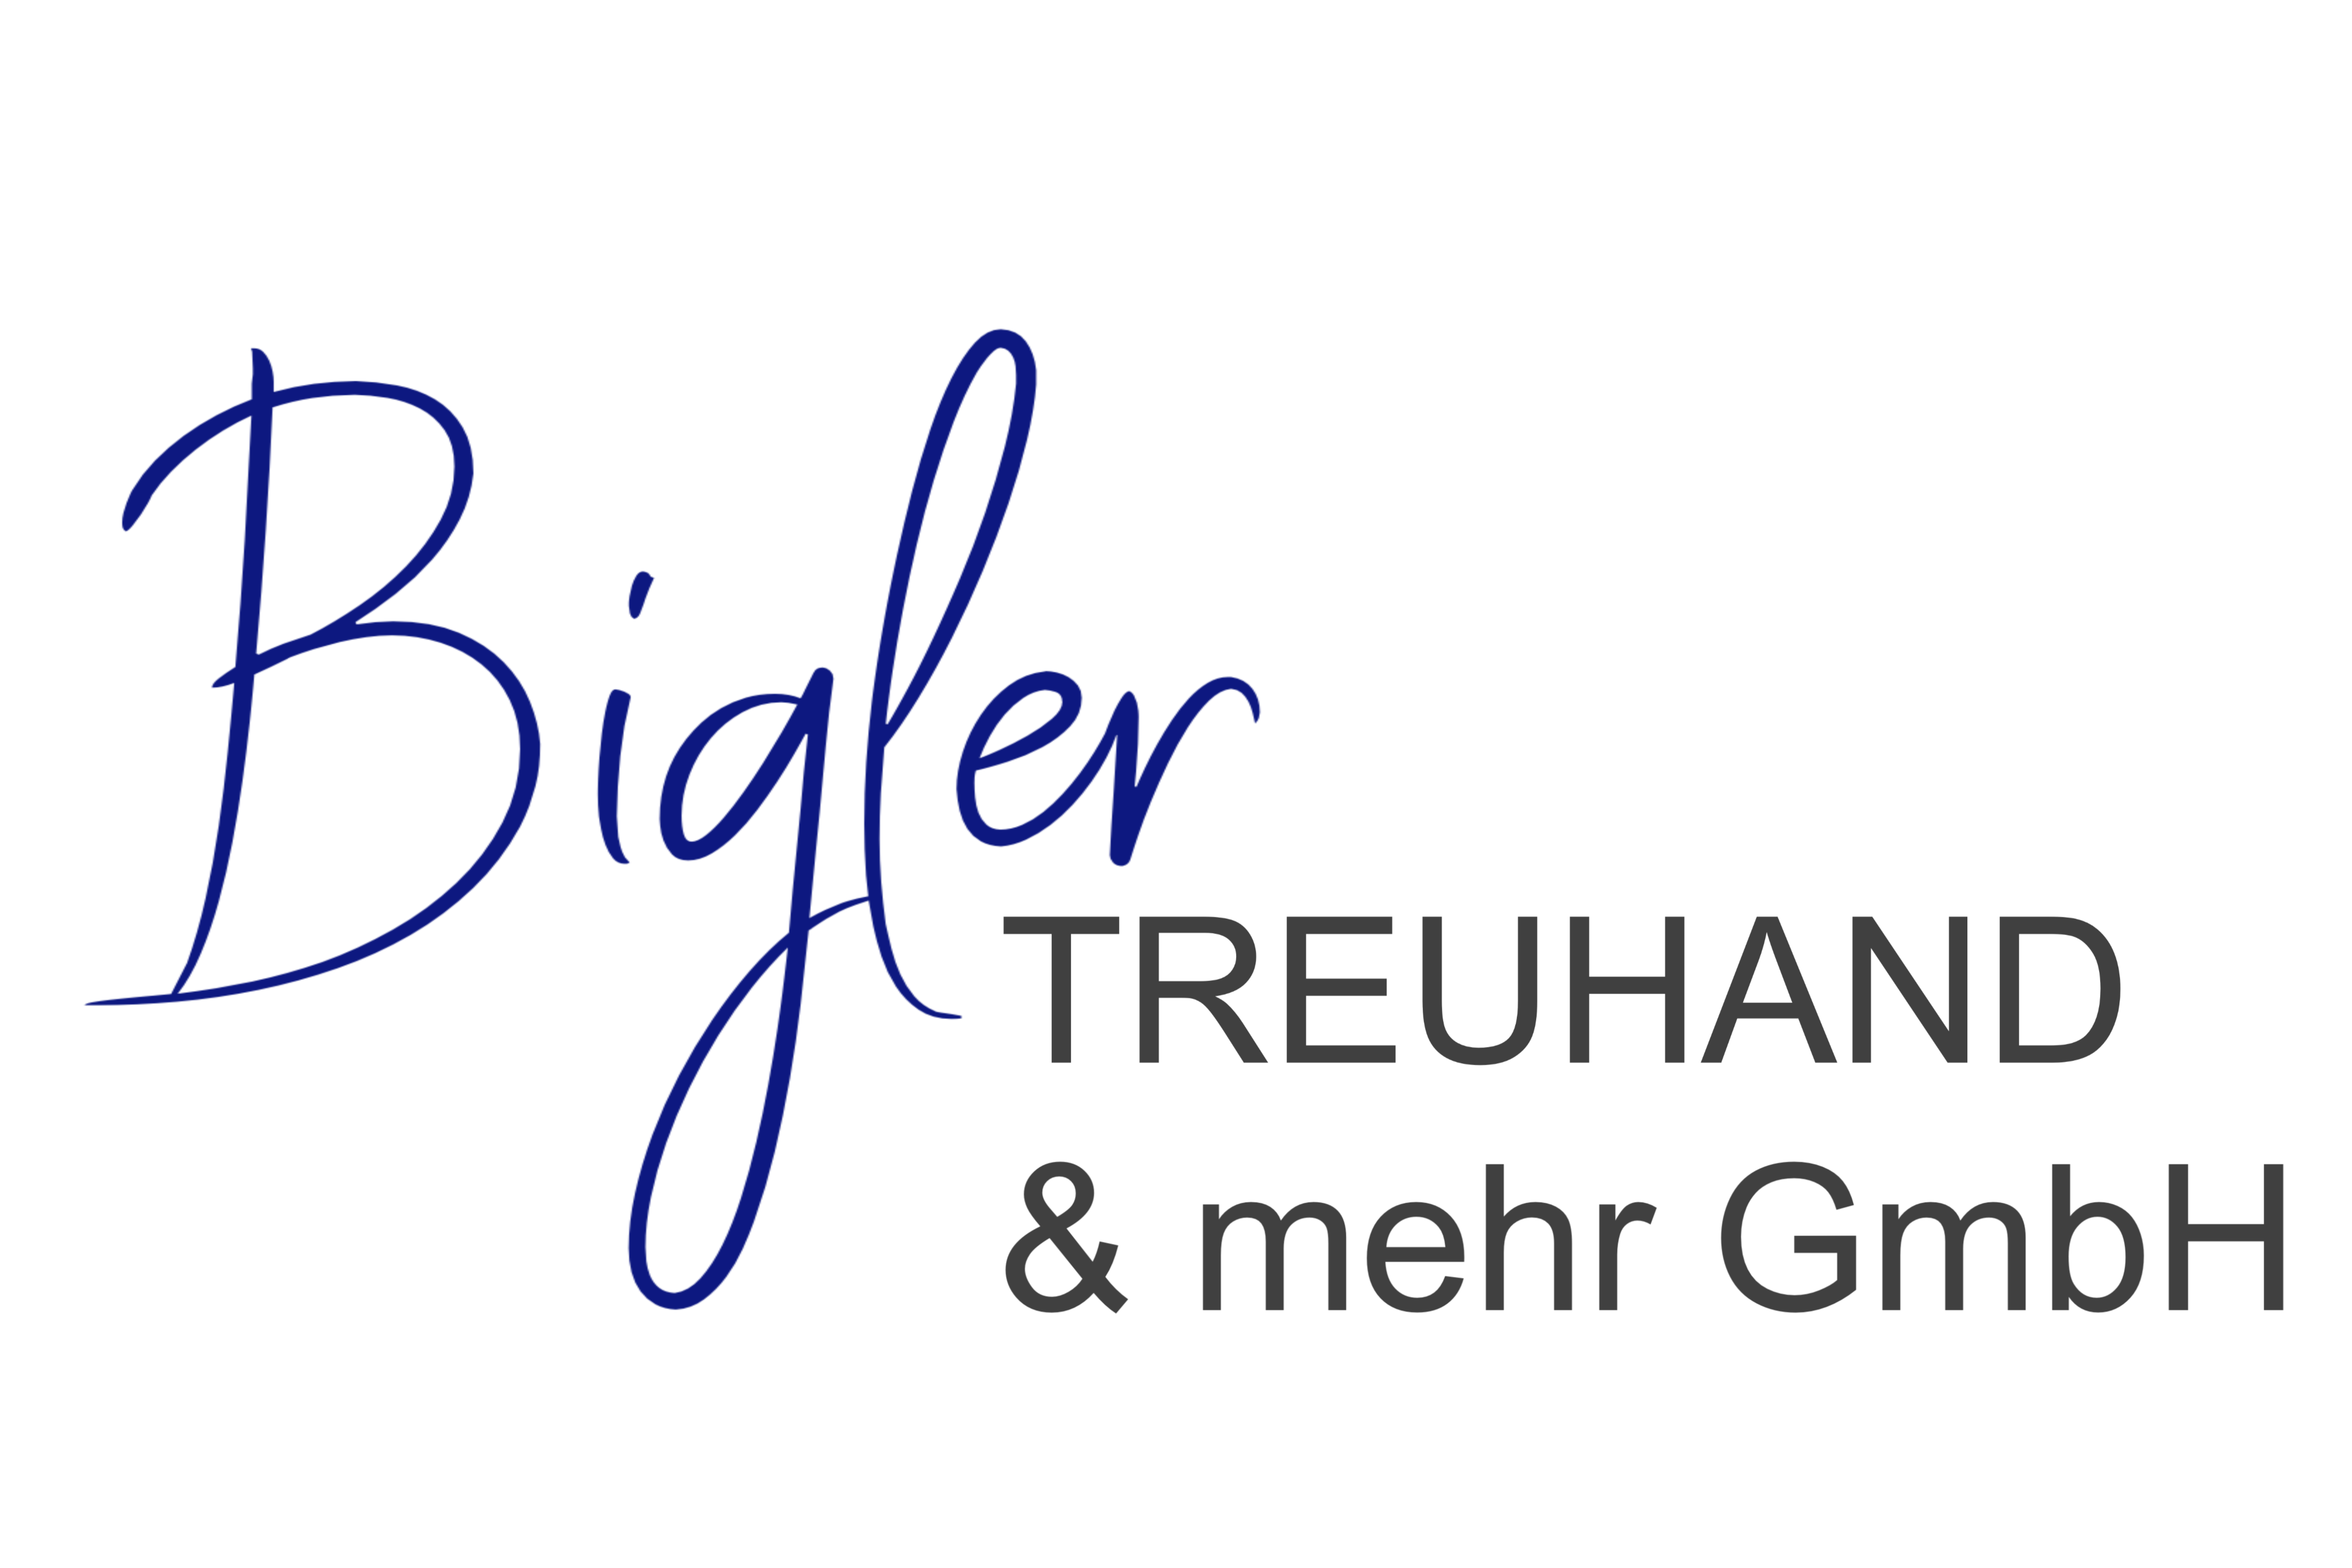 Bigler TREUHAND & mehr